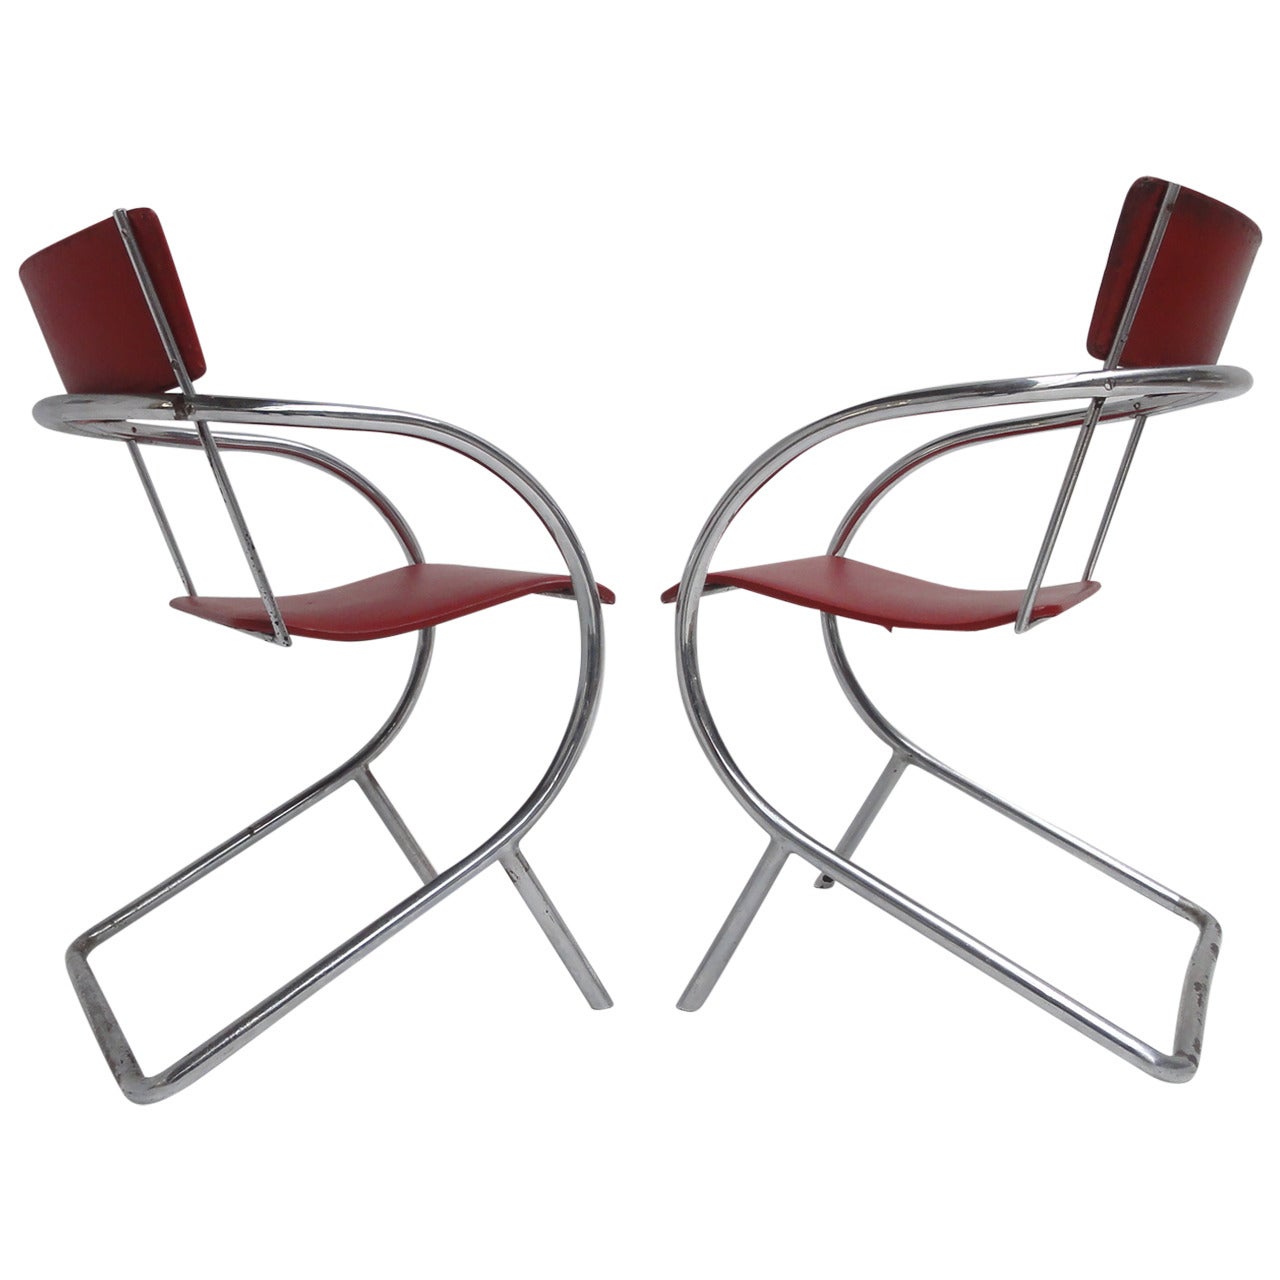 Pair of 1932 Dutch Avant Garde, Model 32 Chairs by Paul Schuitema for D3